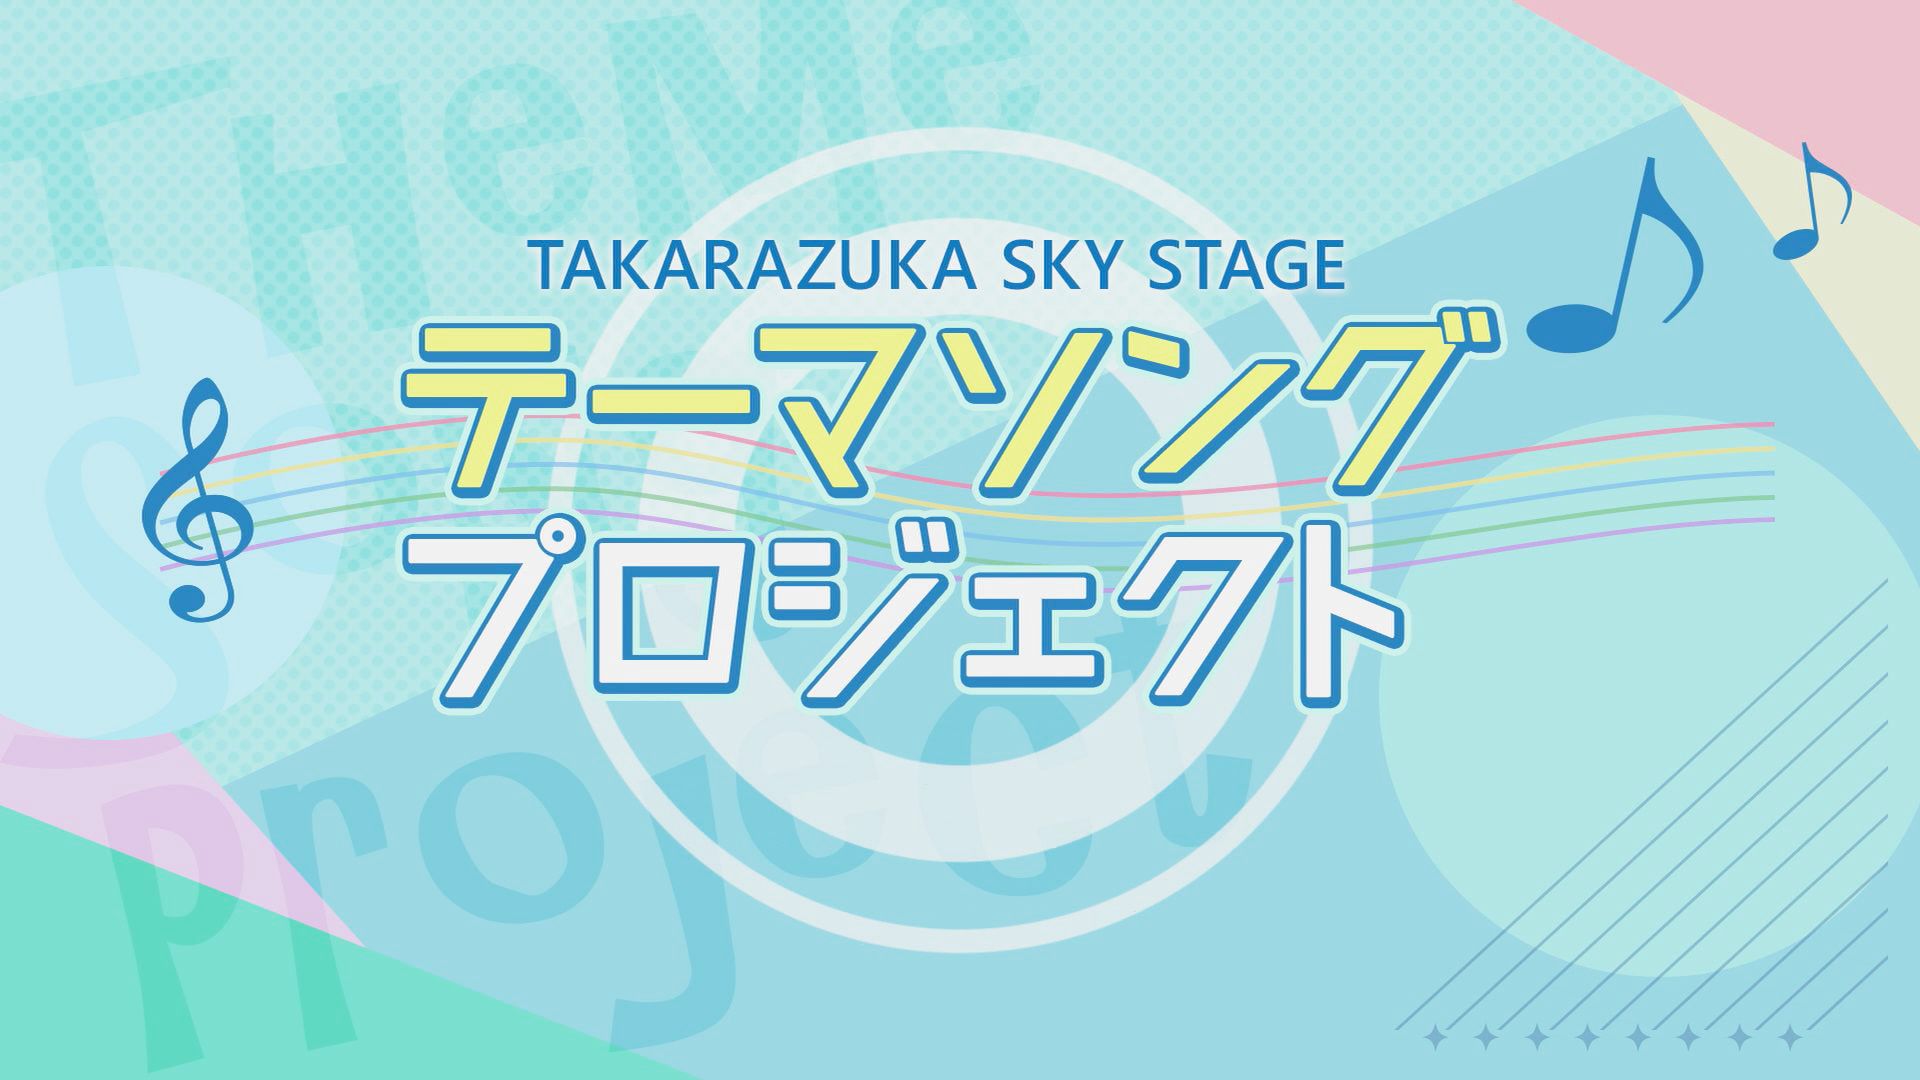 TAKARAZUKA SKY STAGE テーマソングプロジェクト